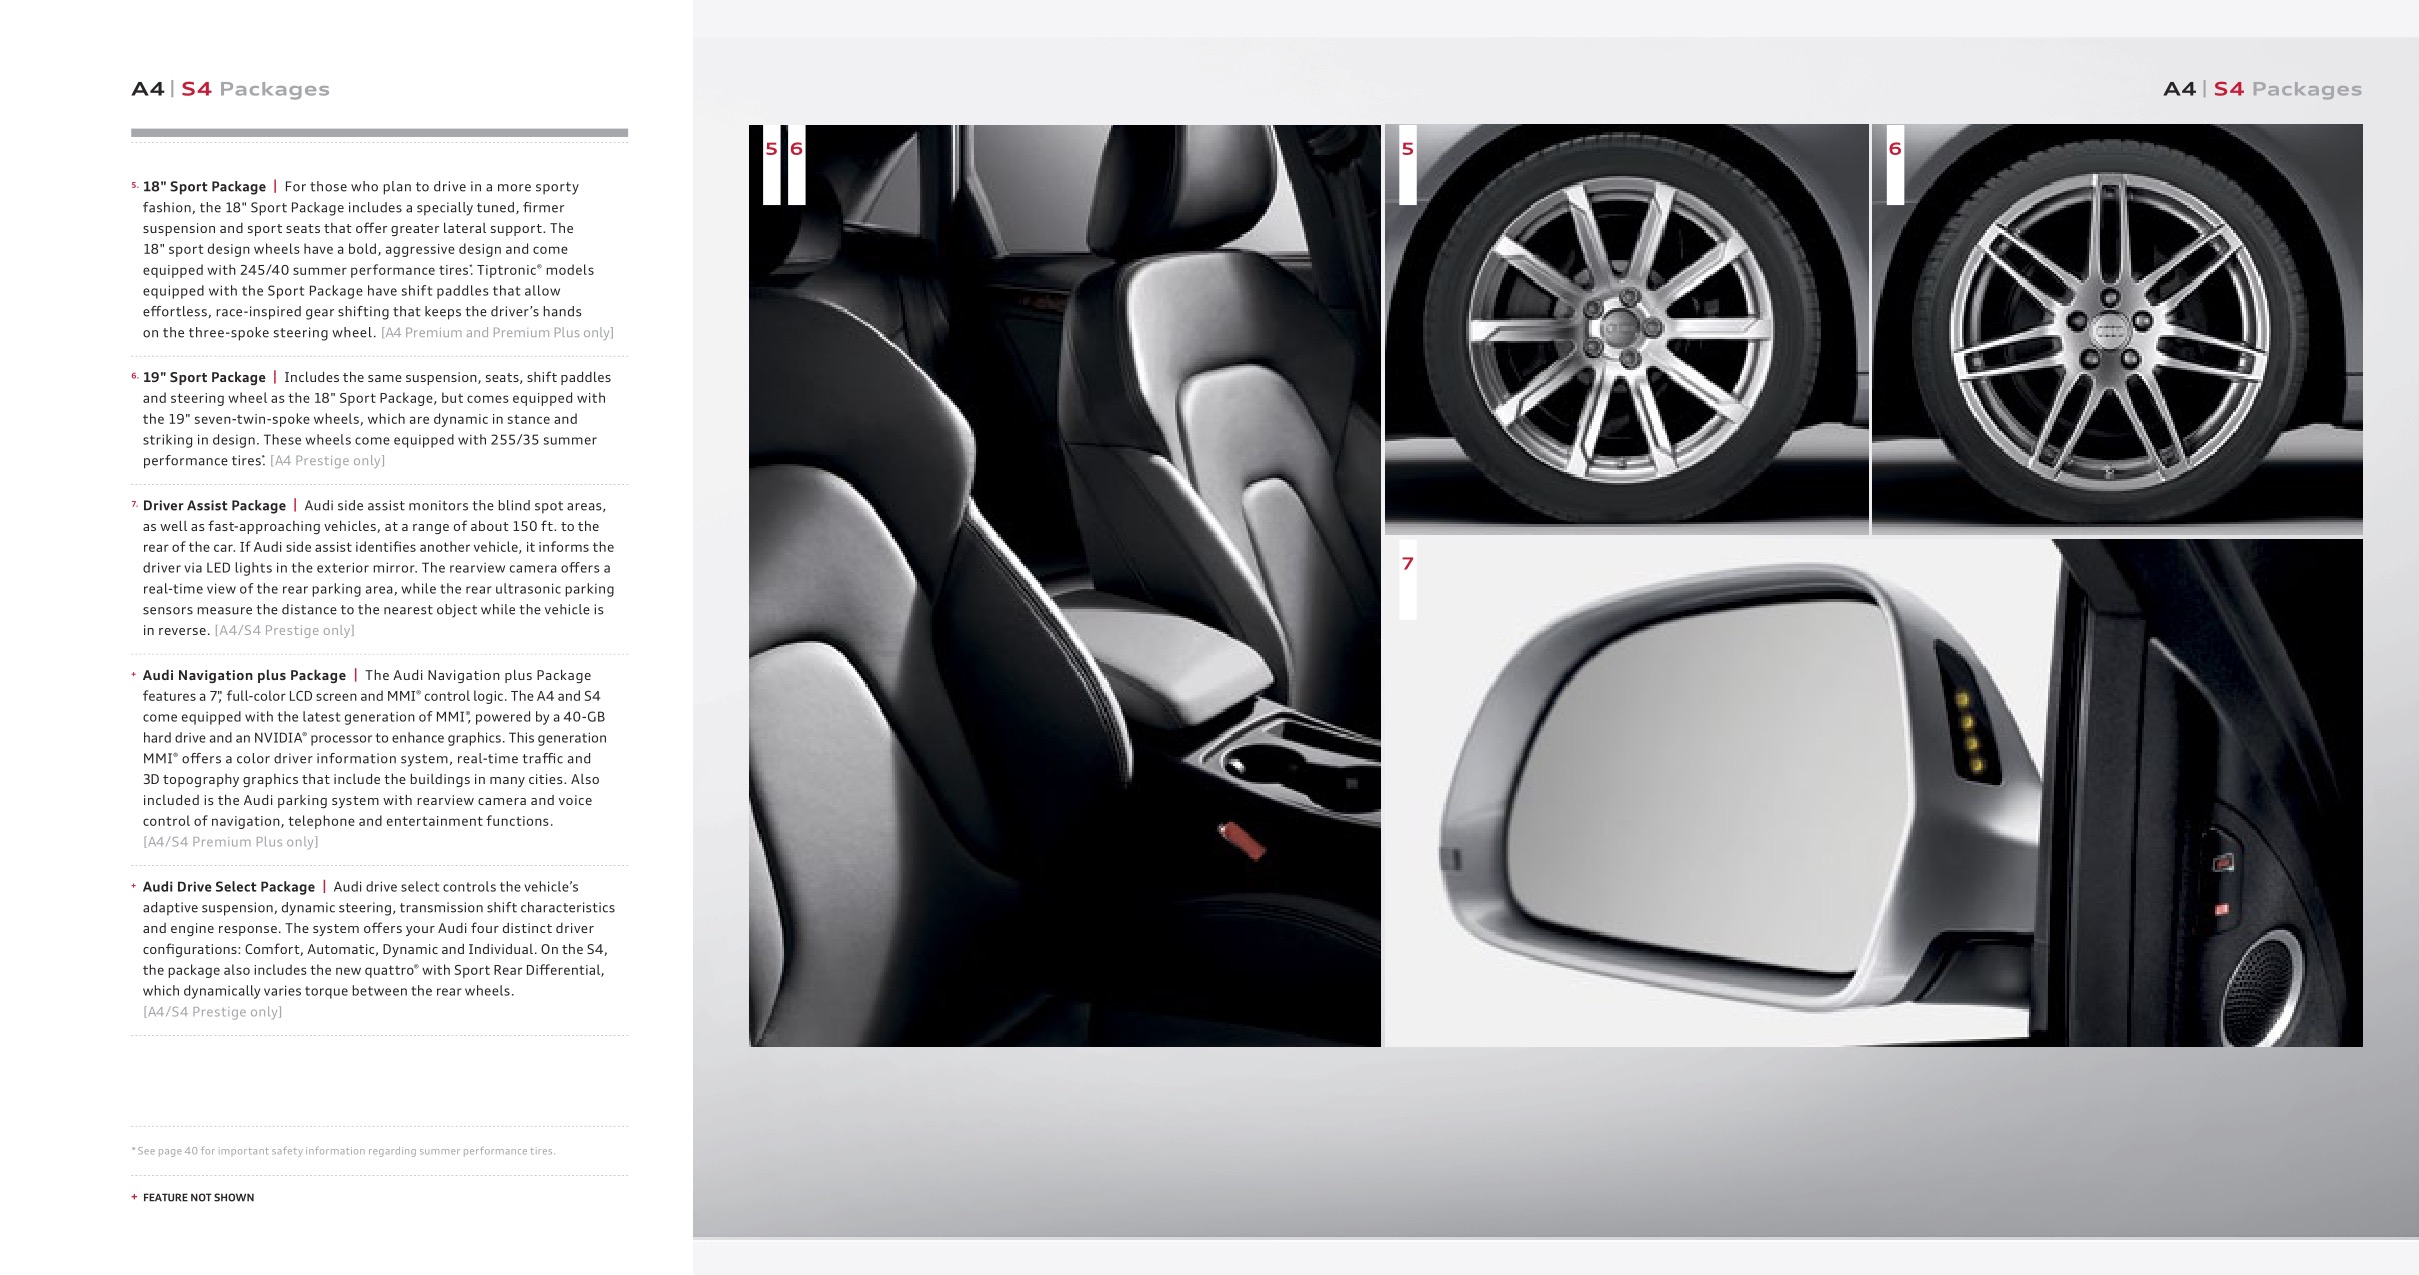 2010 Audi A4 Brochure Page 34